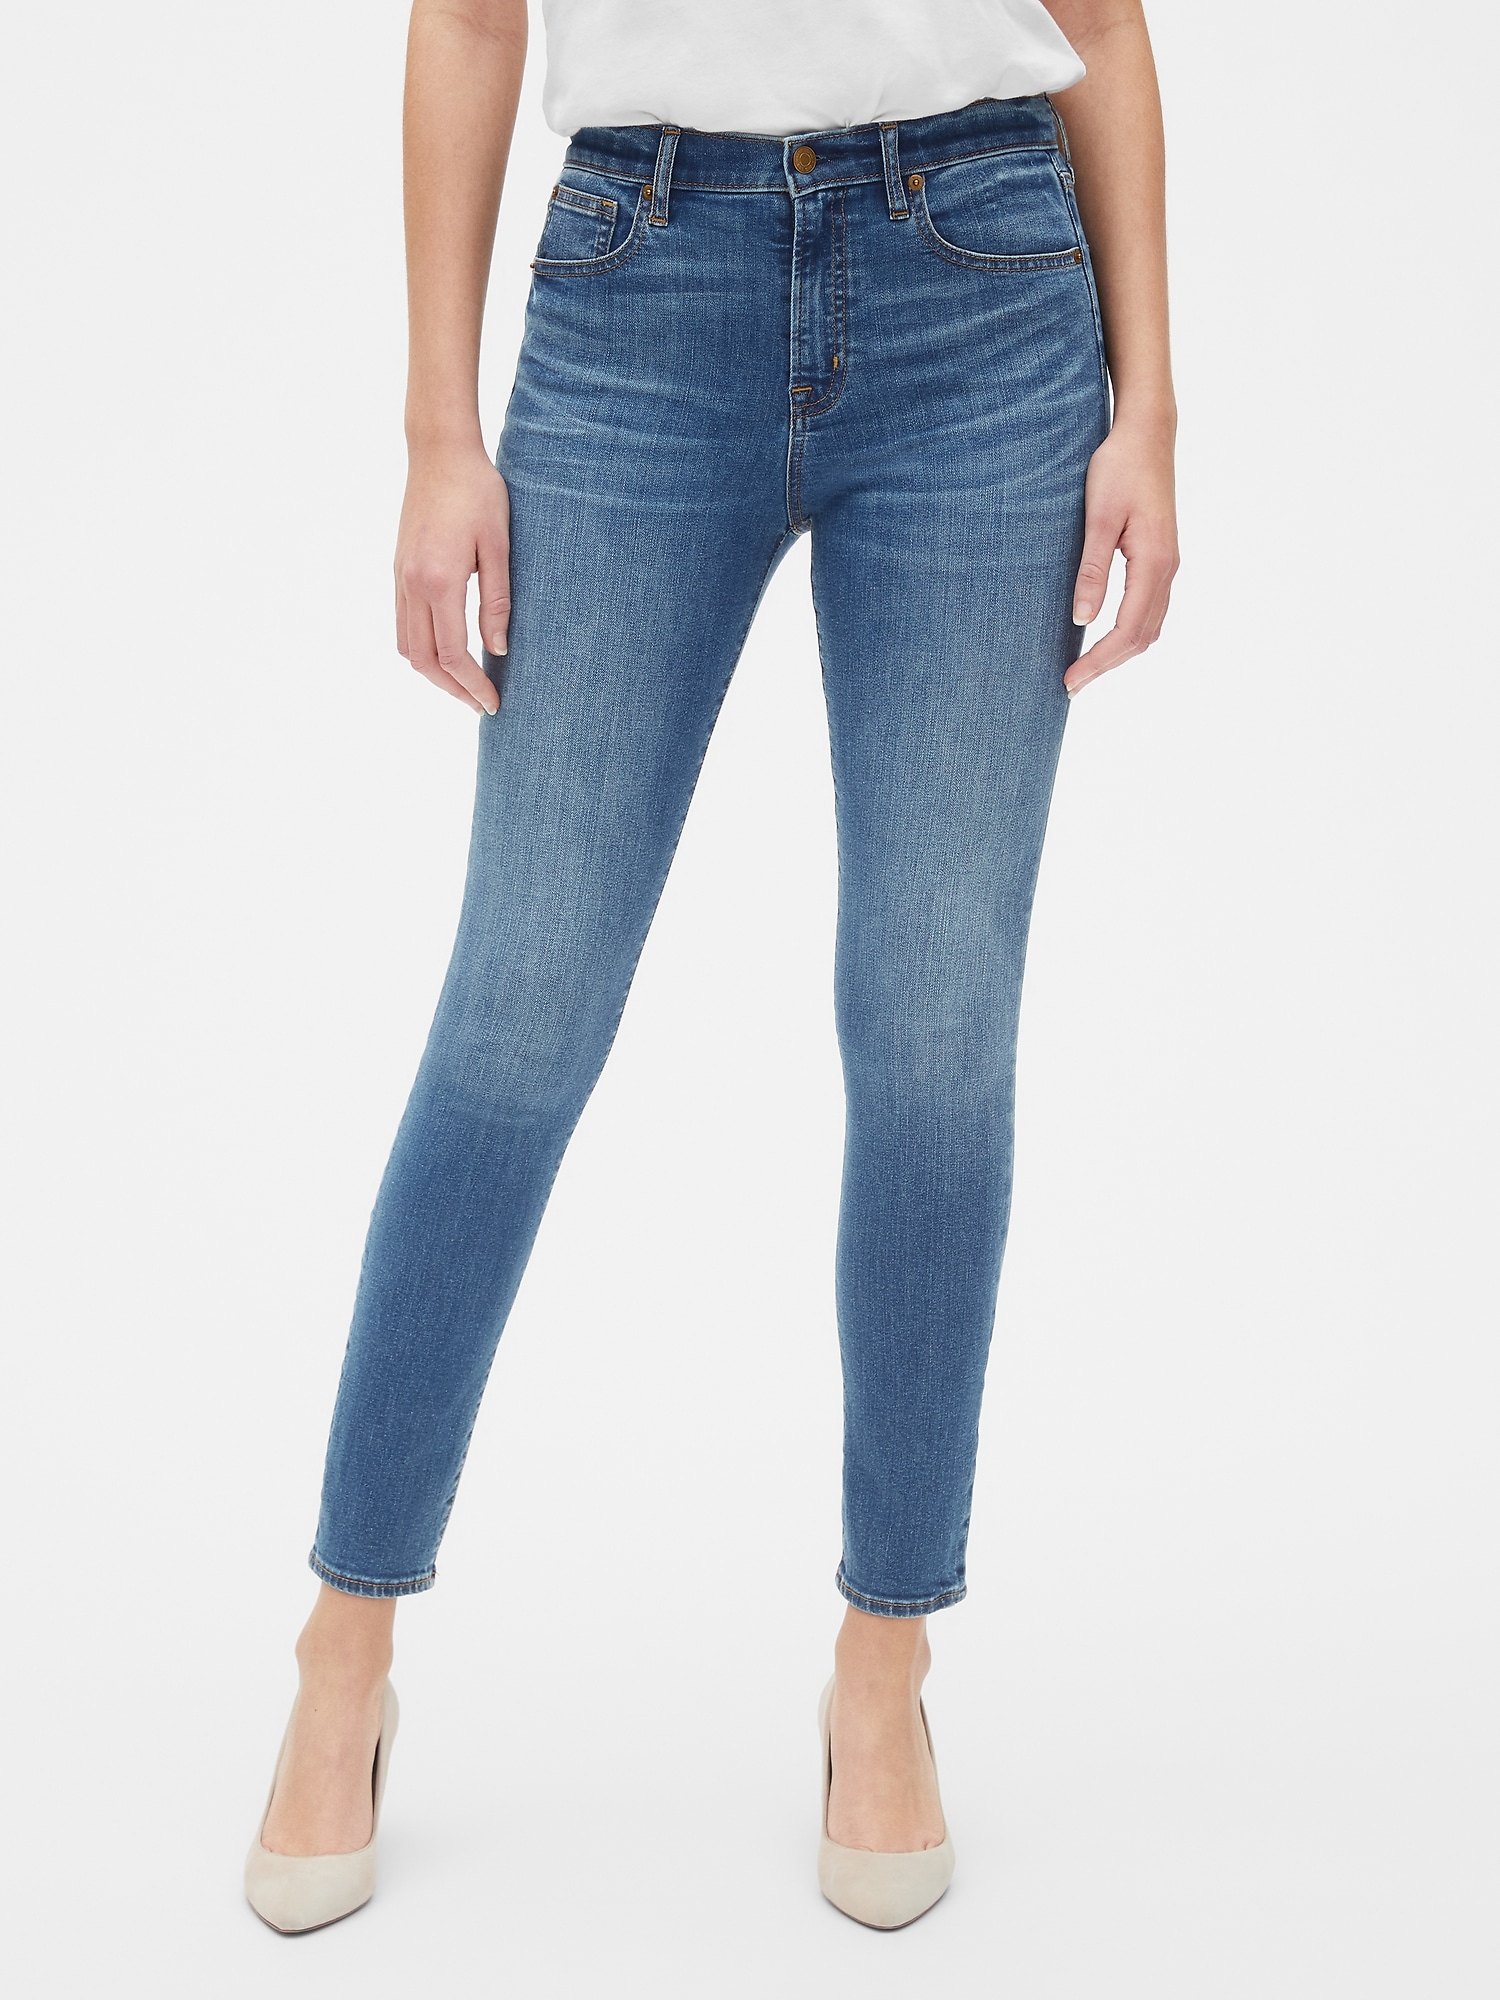 gap curvy skinny jeans review